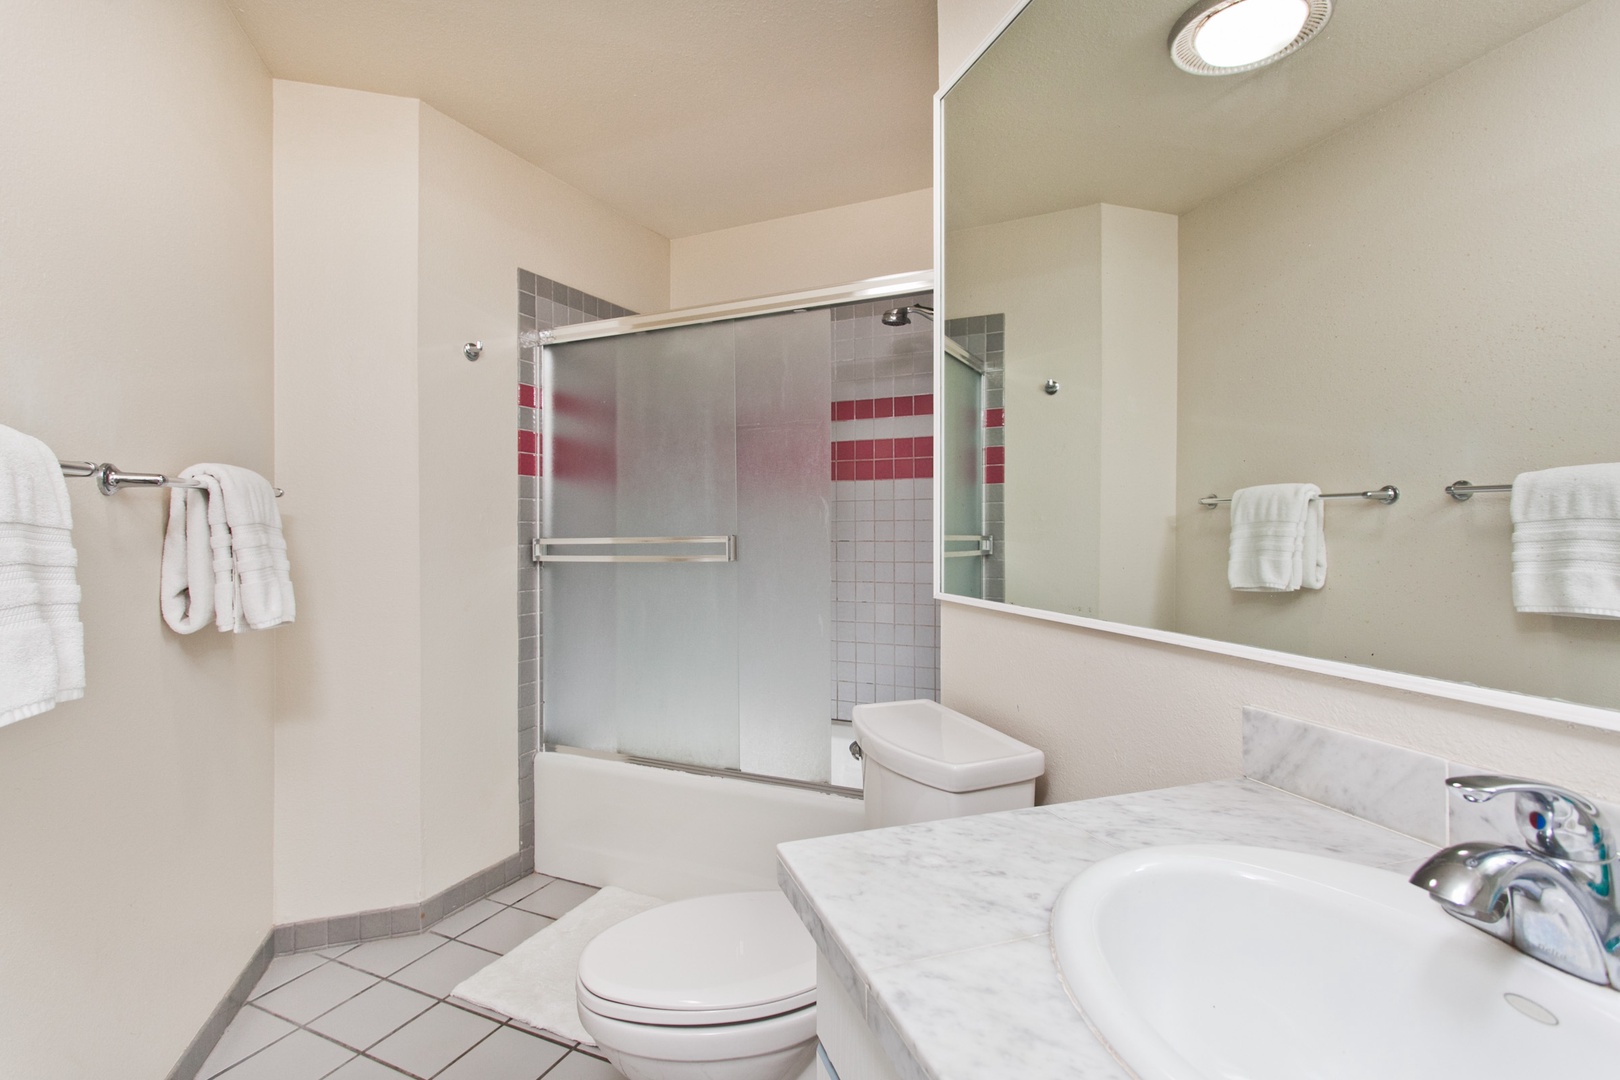 Kailua Vacation Rentals, Hale Kolea* - Full bathroom with a walk-in shower.